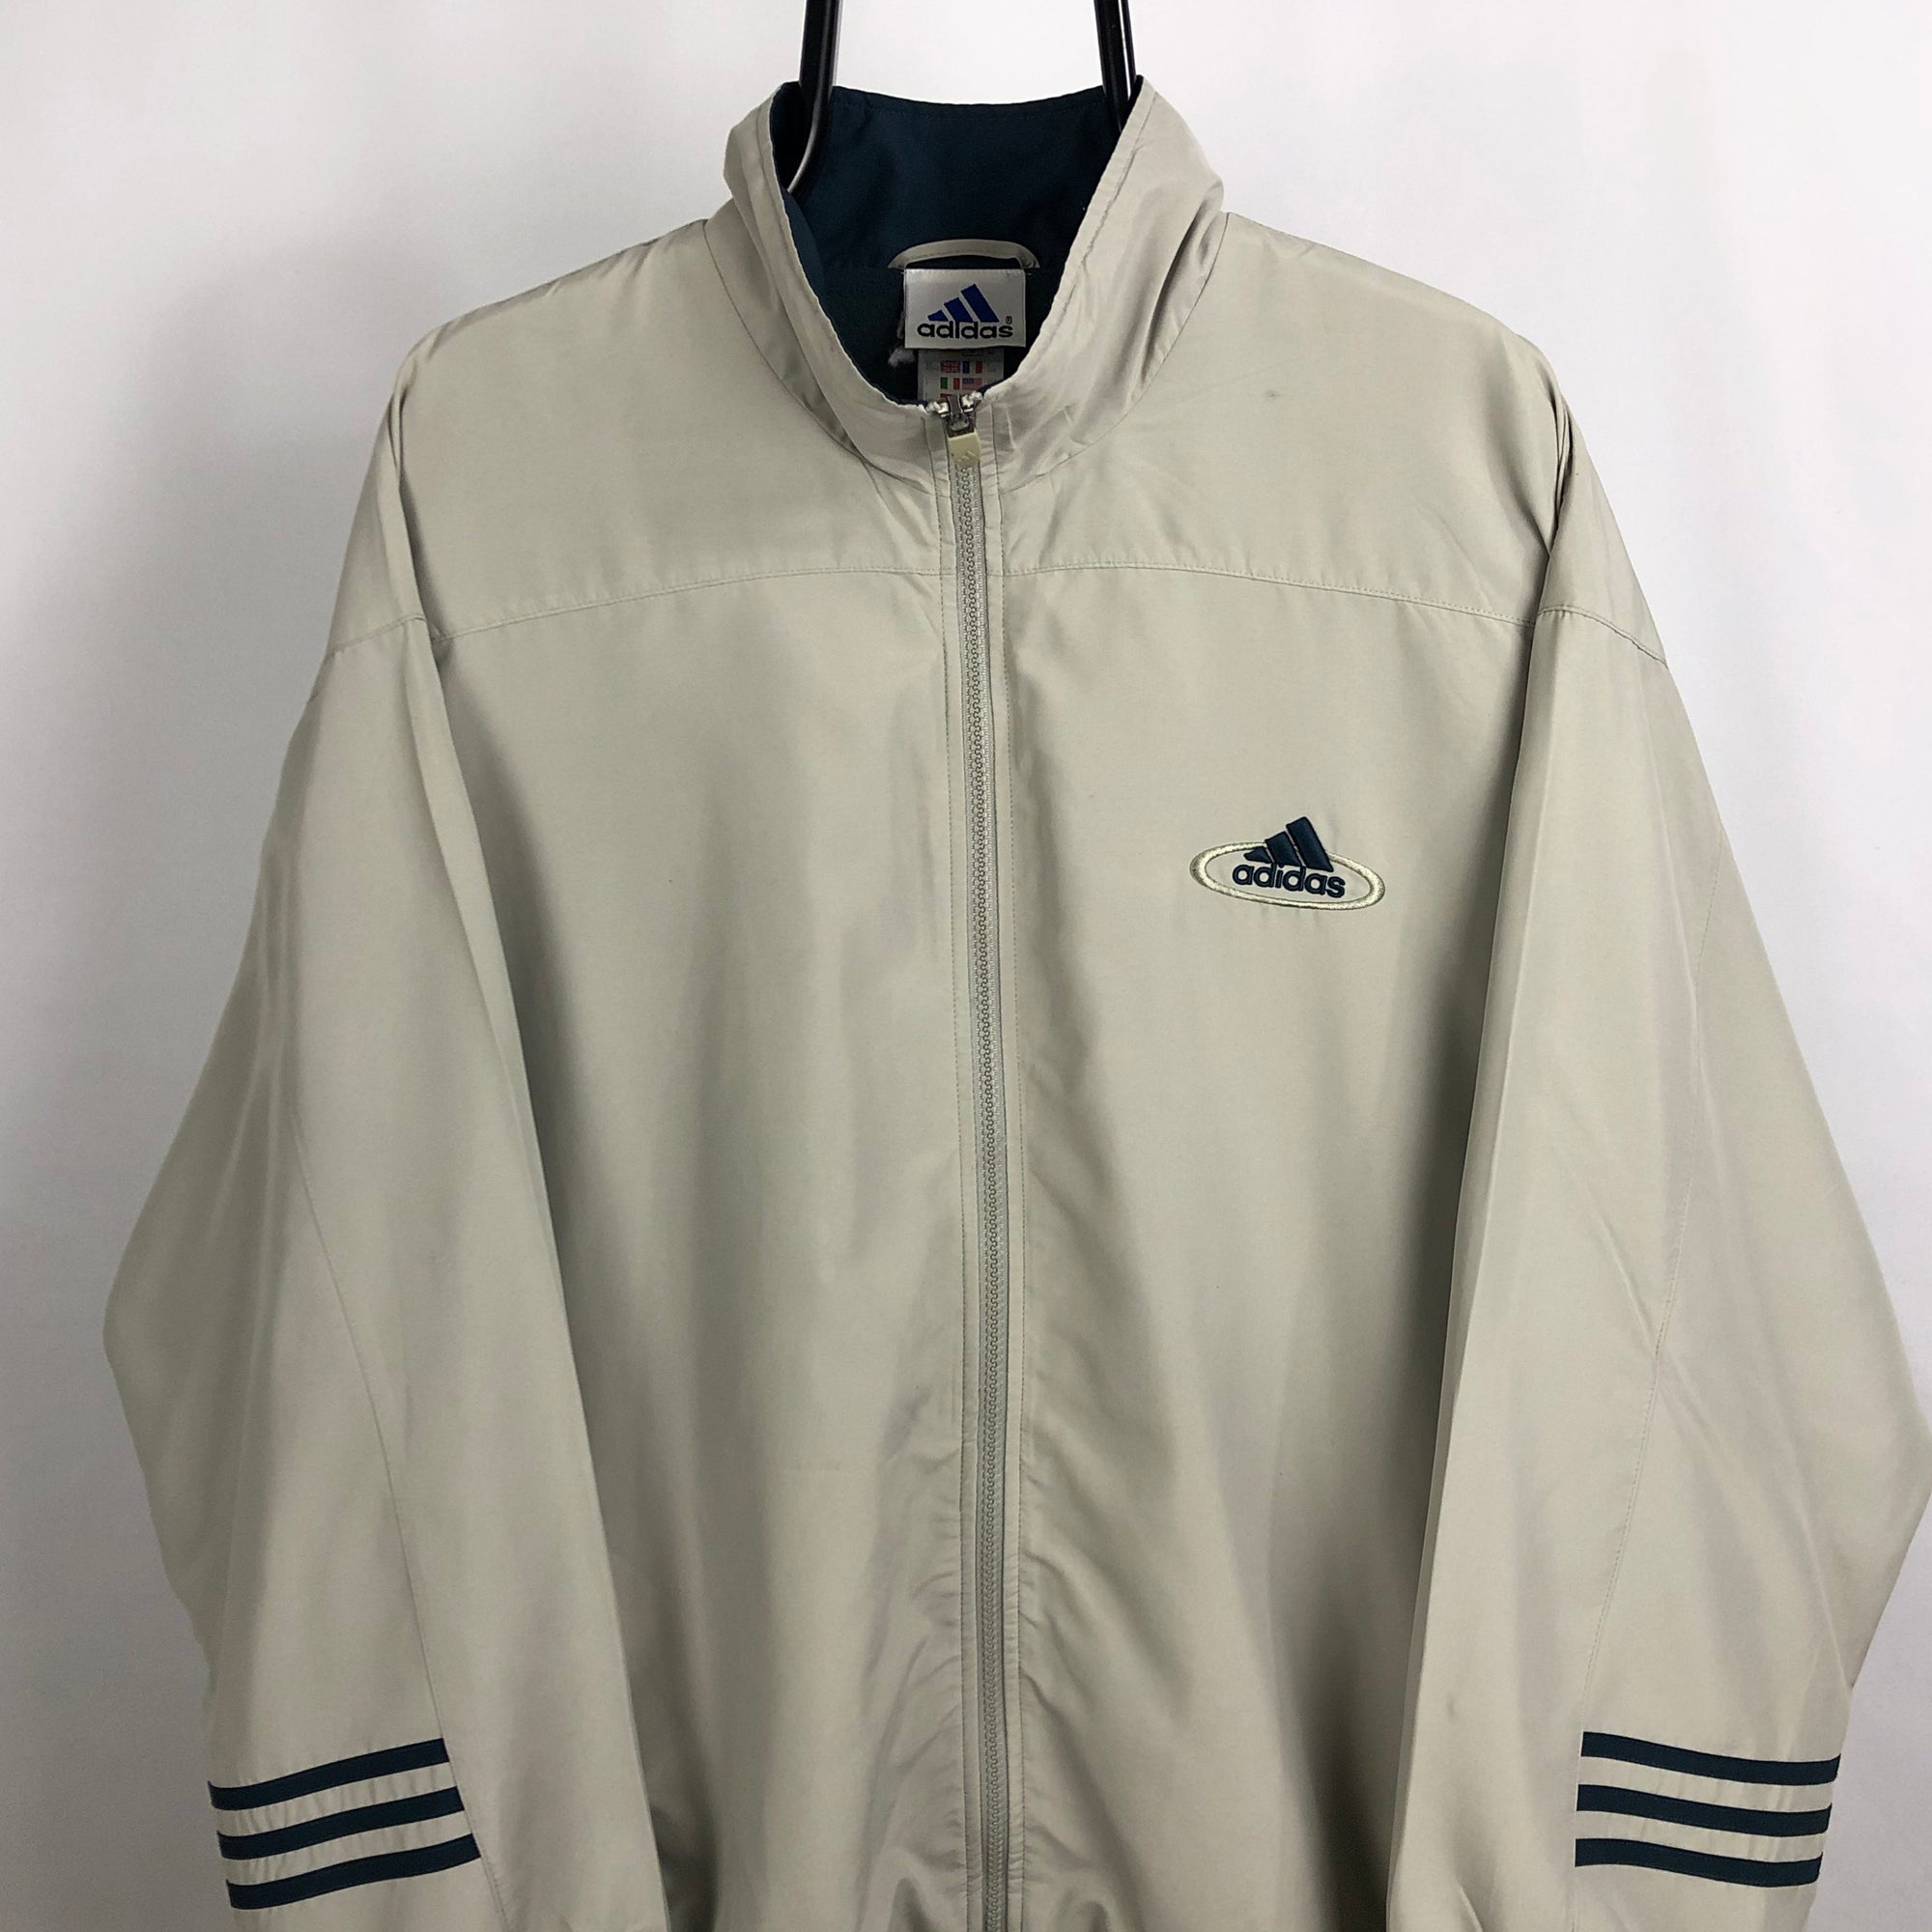 Vintage 90s Adidas Track Jacket in Beige/Sage Green - Men's Large/Women's XL